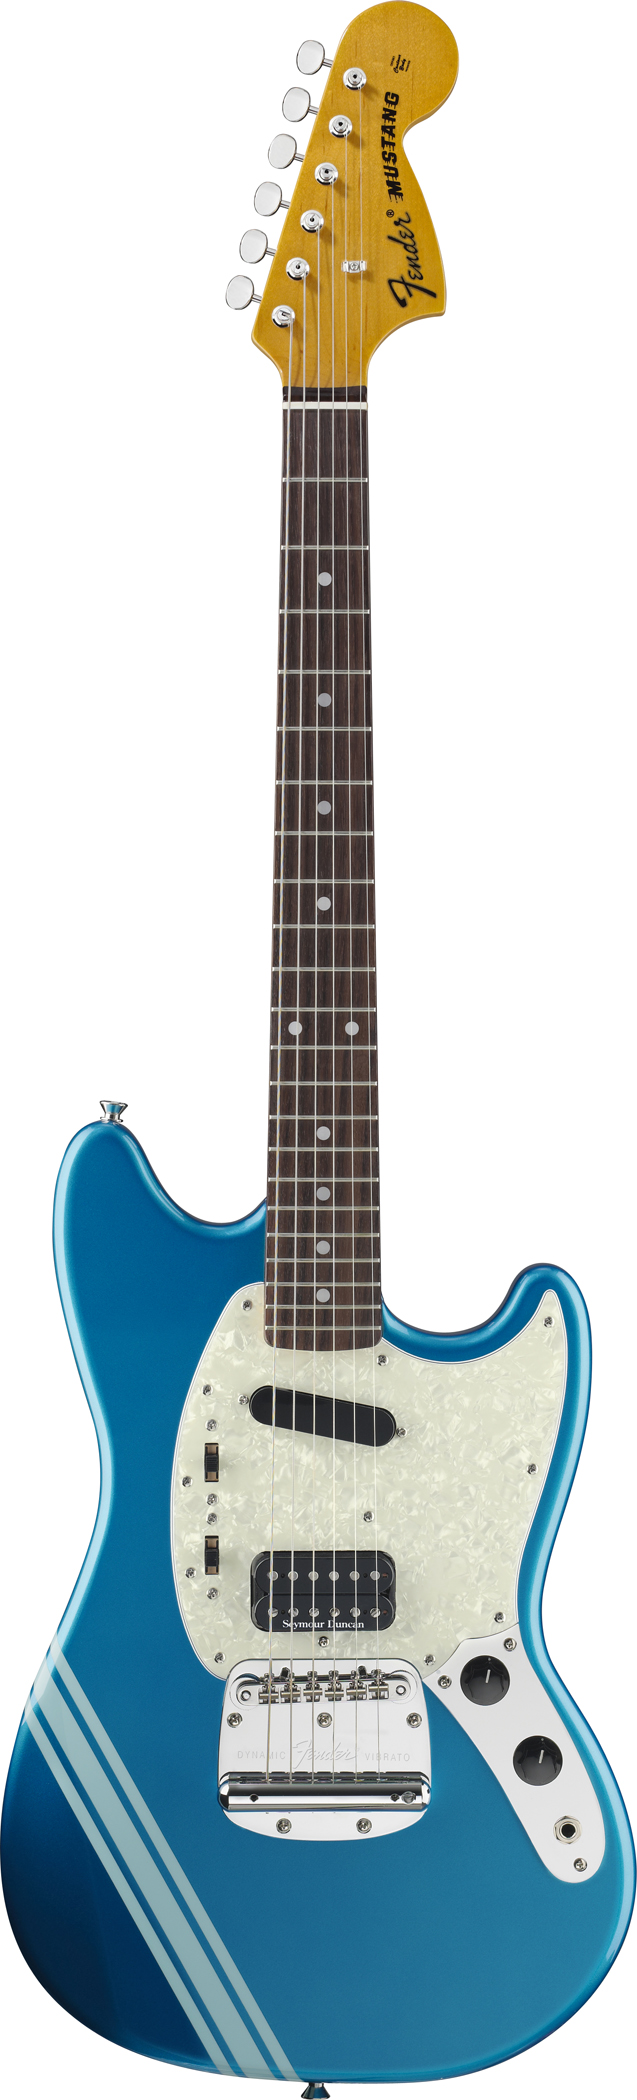 Nirvana In Utero Custom Made Fender Jazz Bass Guitar Pickguard 